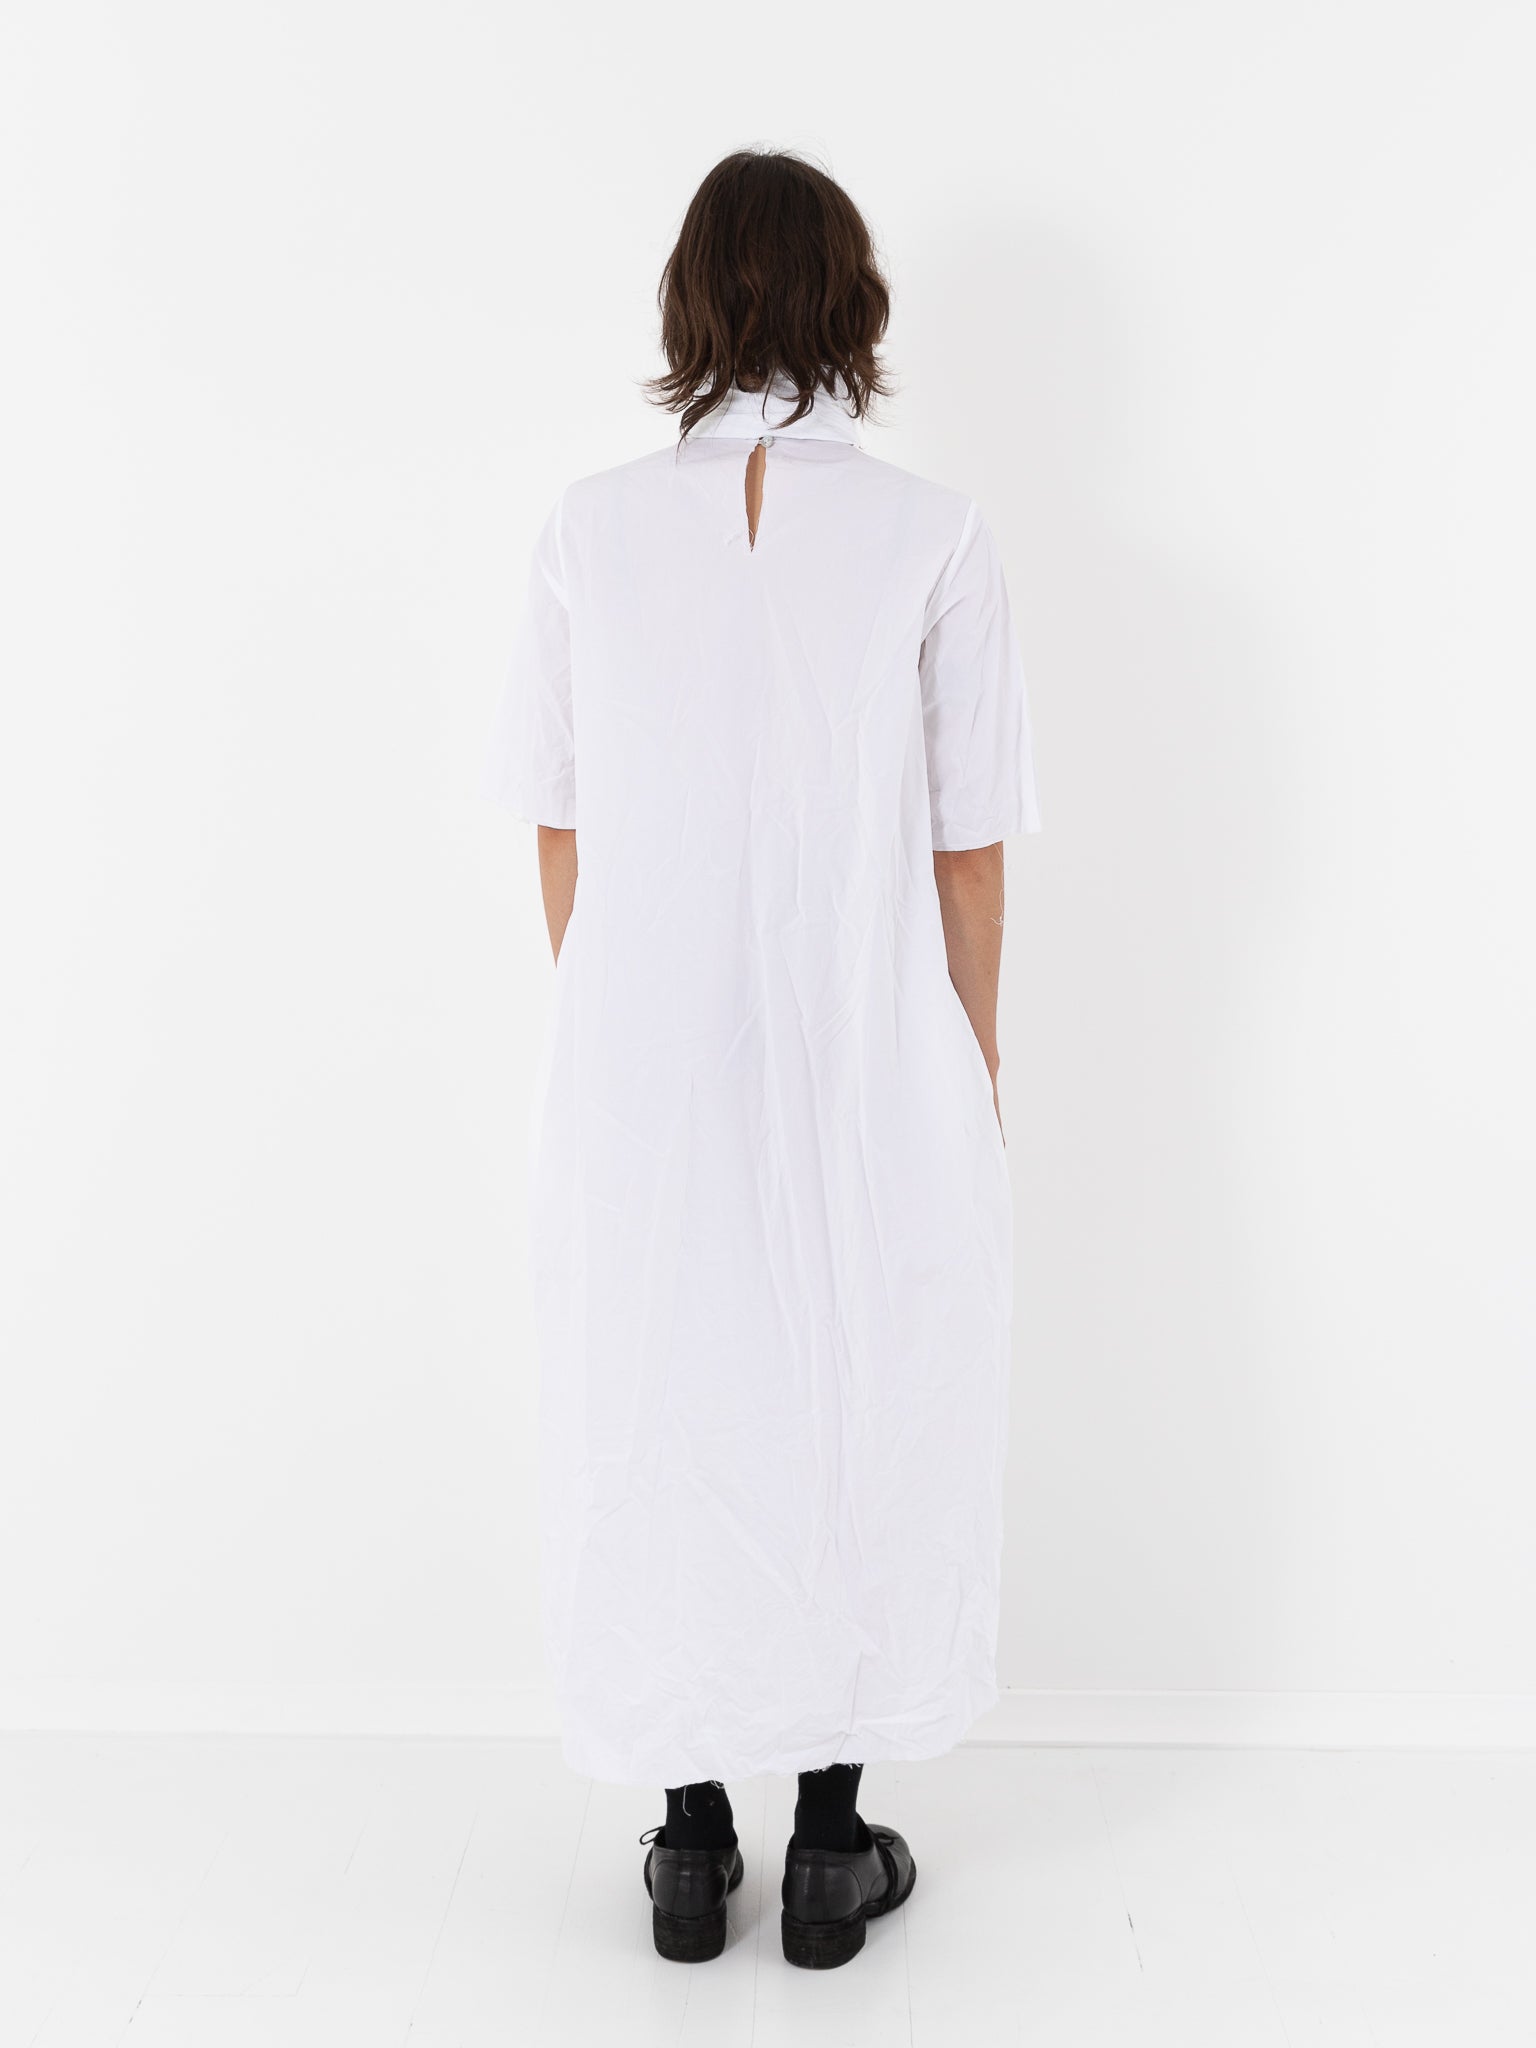 SCHA Half Sleeve Dress, White - Worthwhile, Inc.